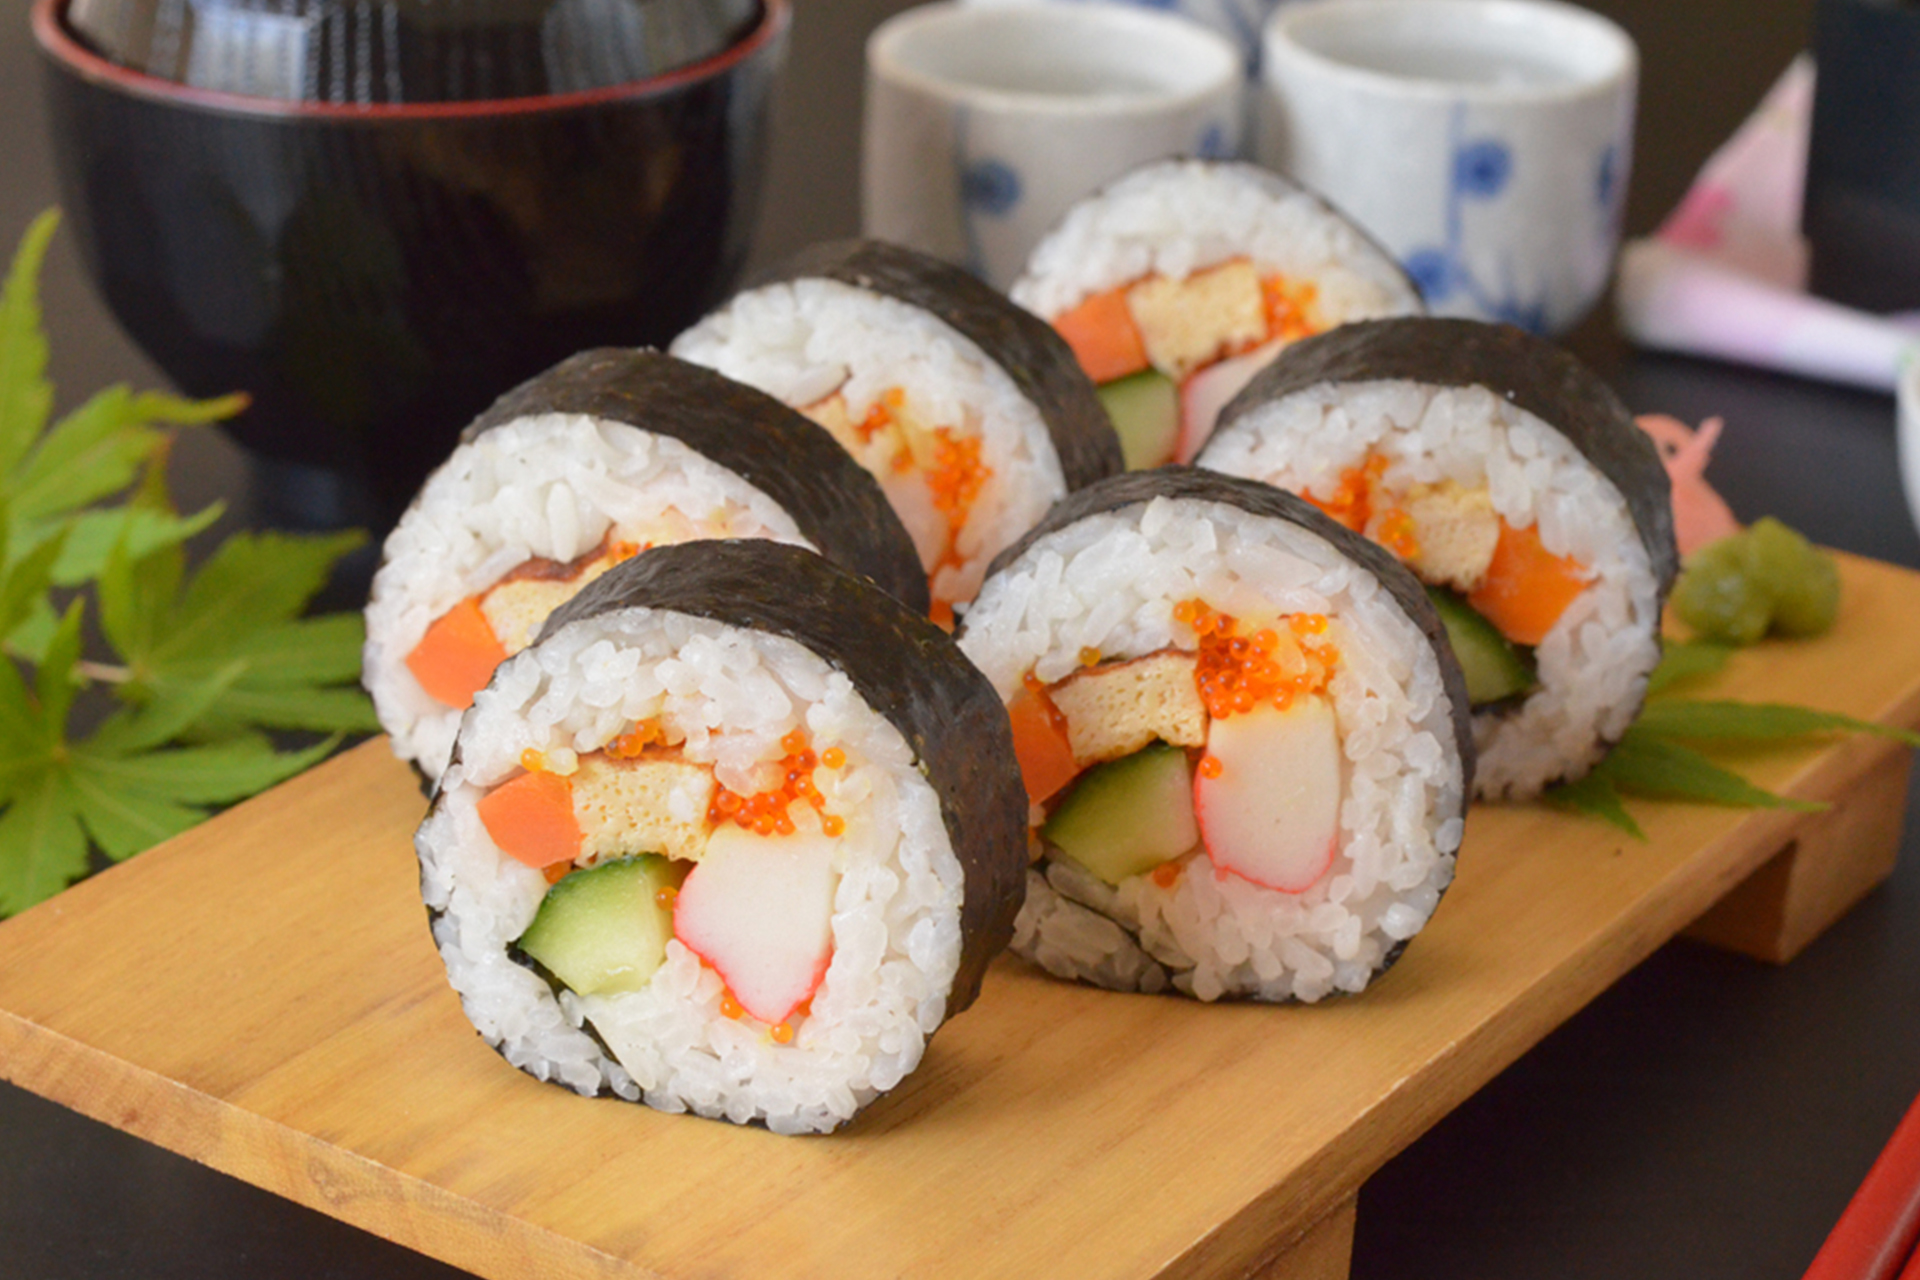 Step-by-step process of assembling sushi roll using yaki sushi nori